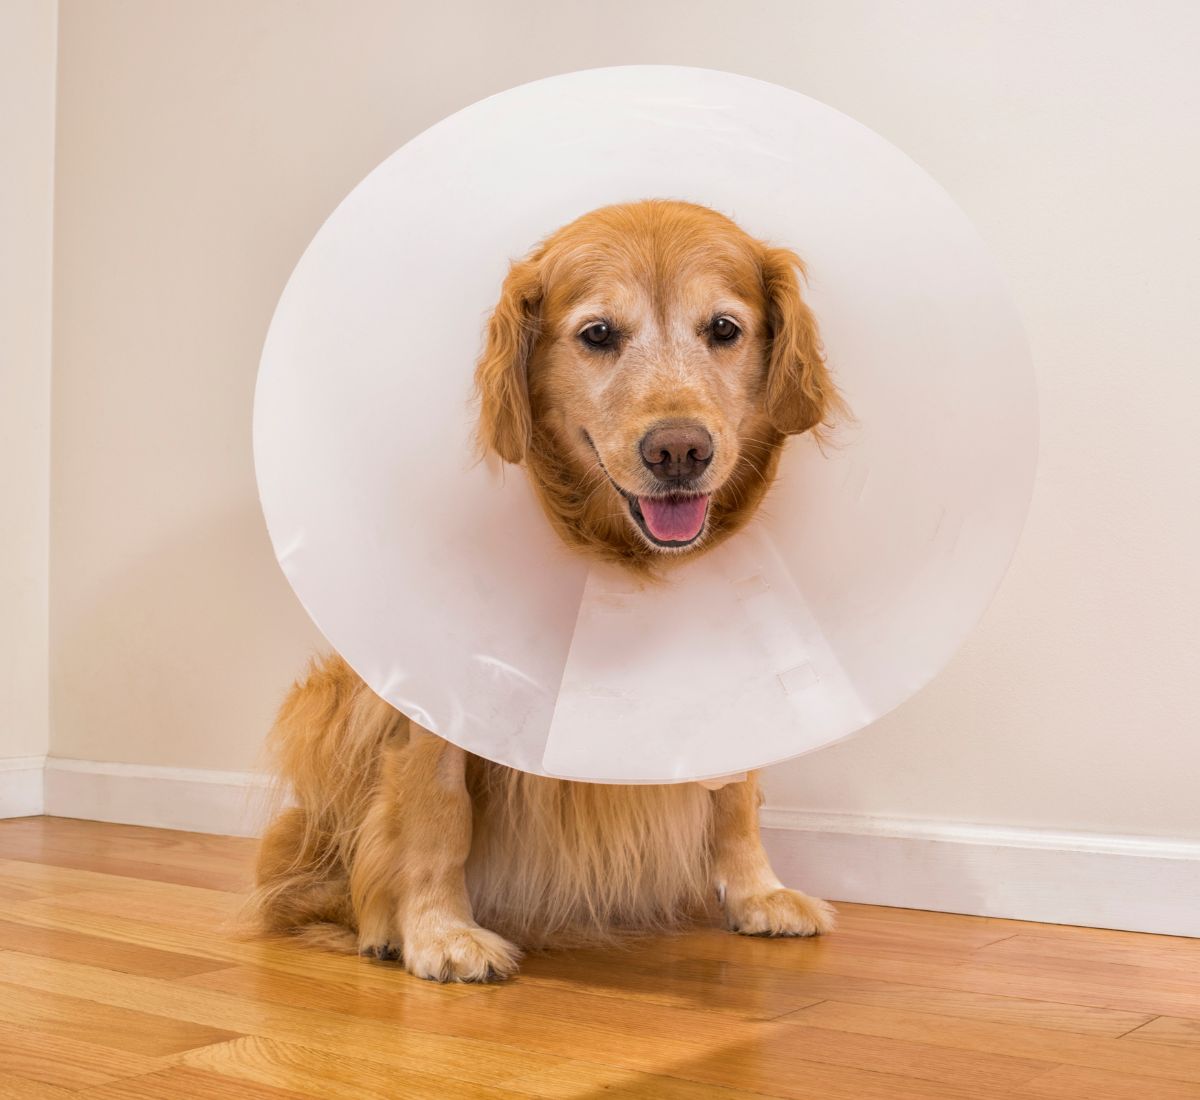 Dog wearing e-collar after surgery